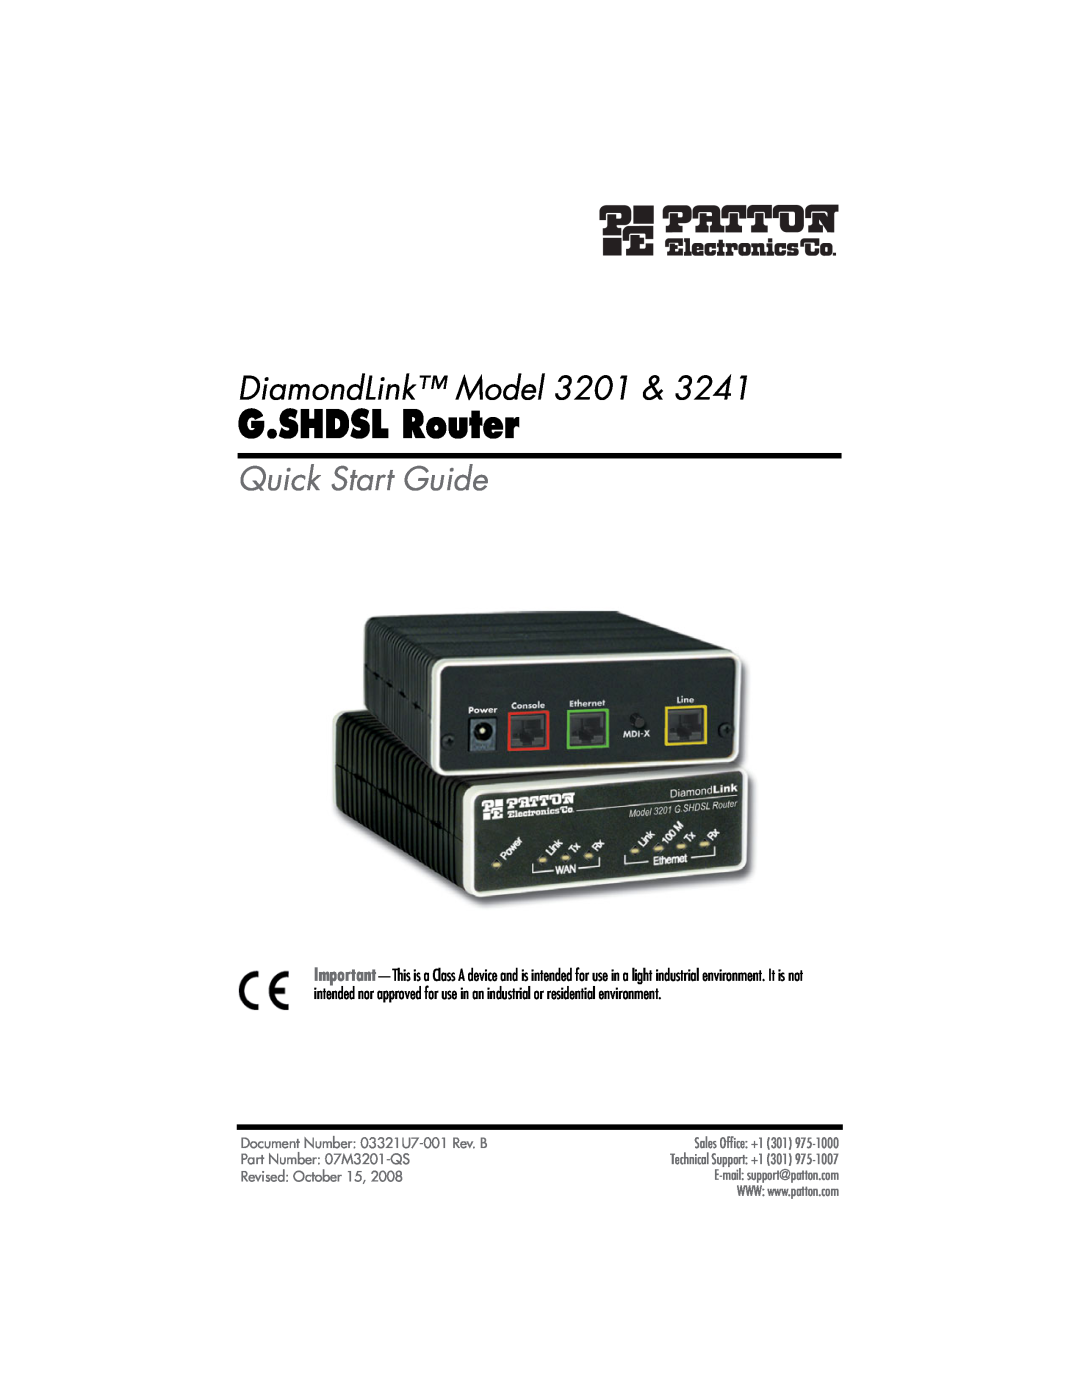 Patton electronic quick start G.SHDSL Router, DiamondLink Model 3201, Quick Start Guide, Part Number 07M3201-QS 